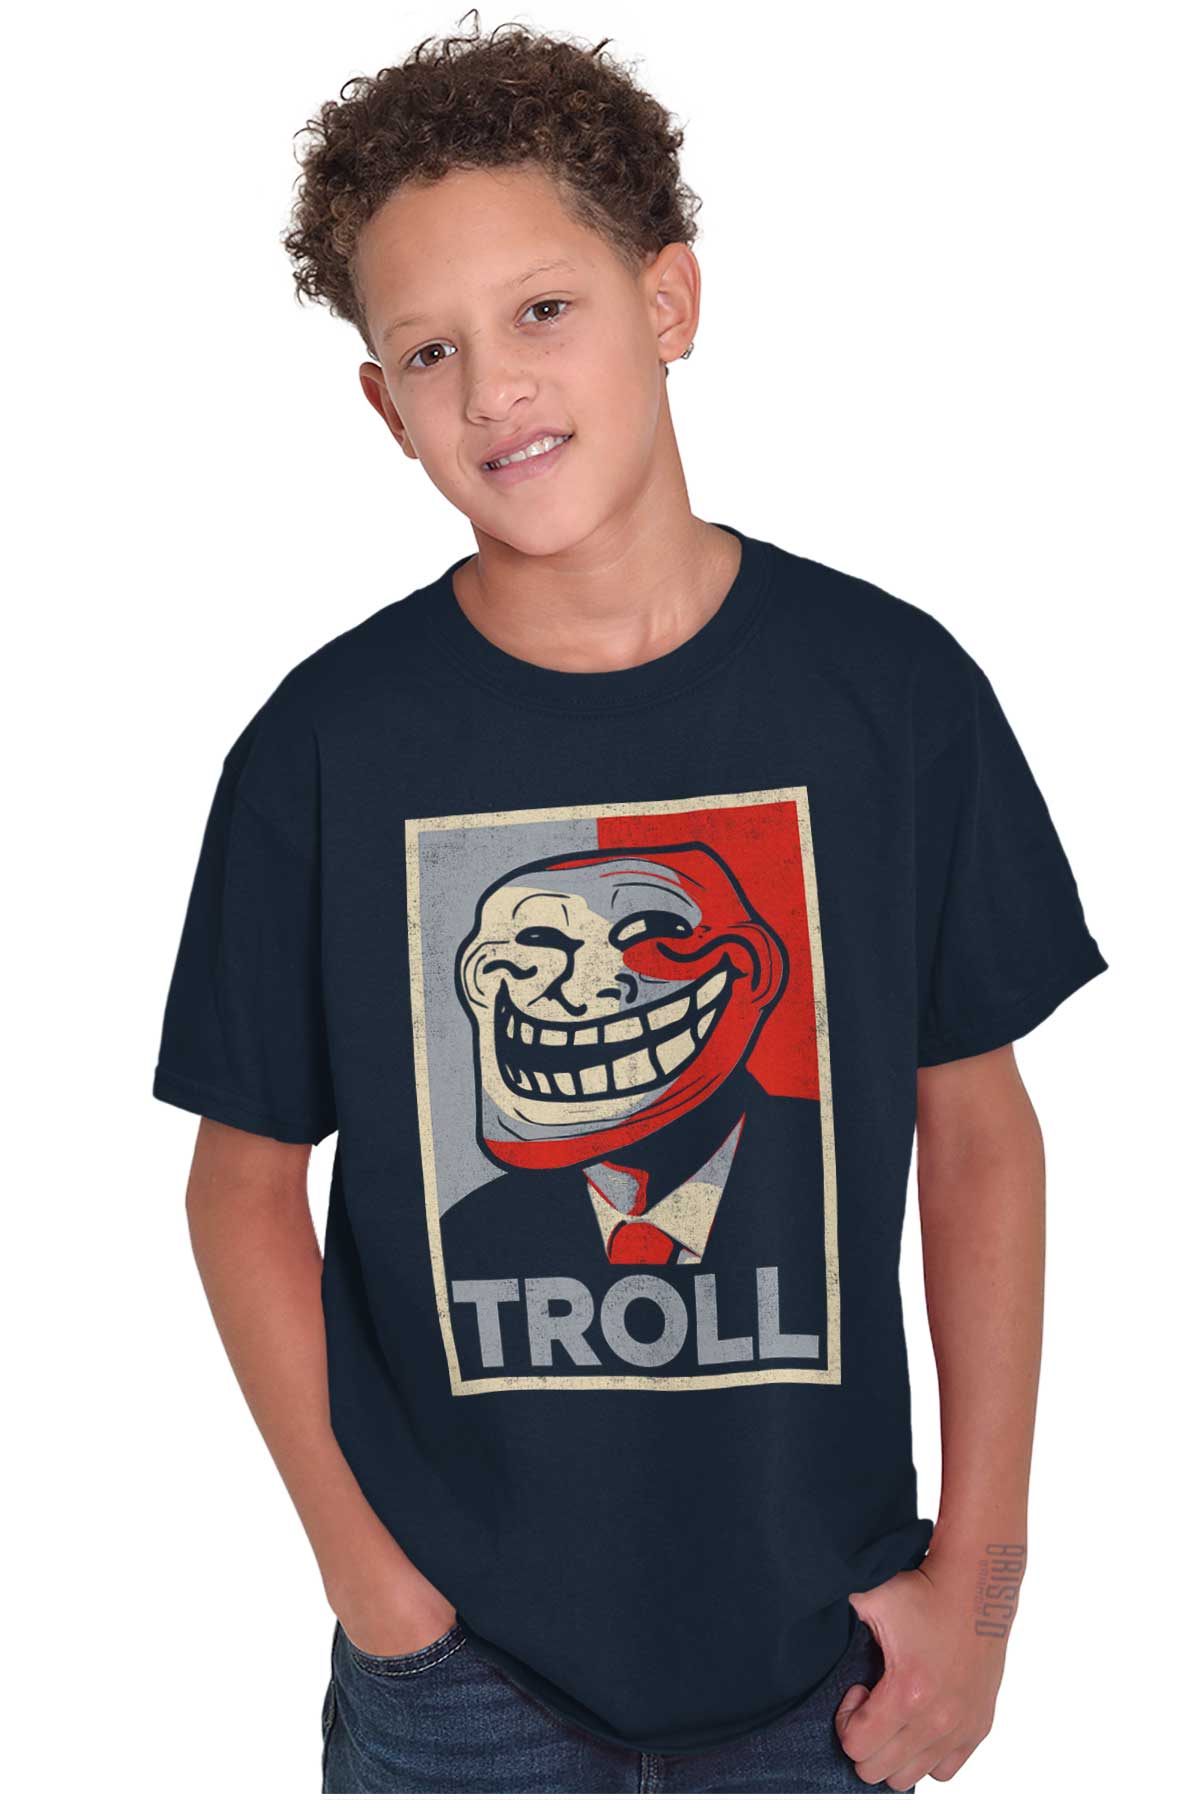 Sad Trollface, Trollface